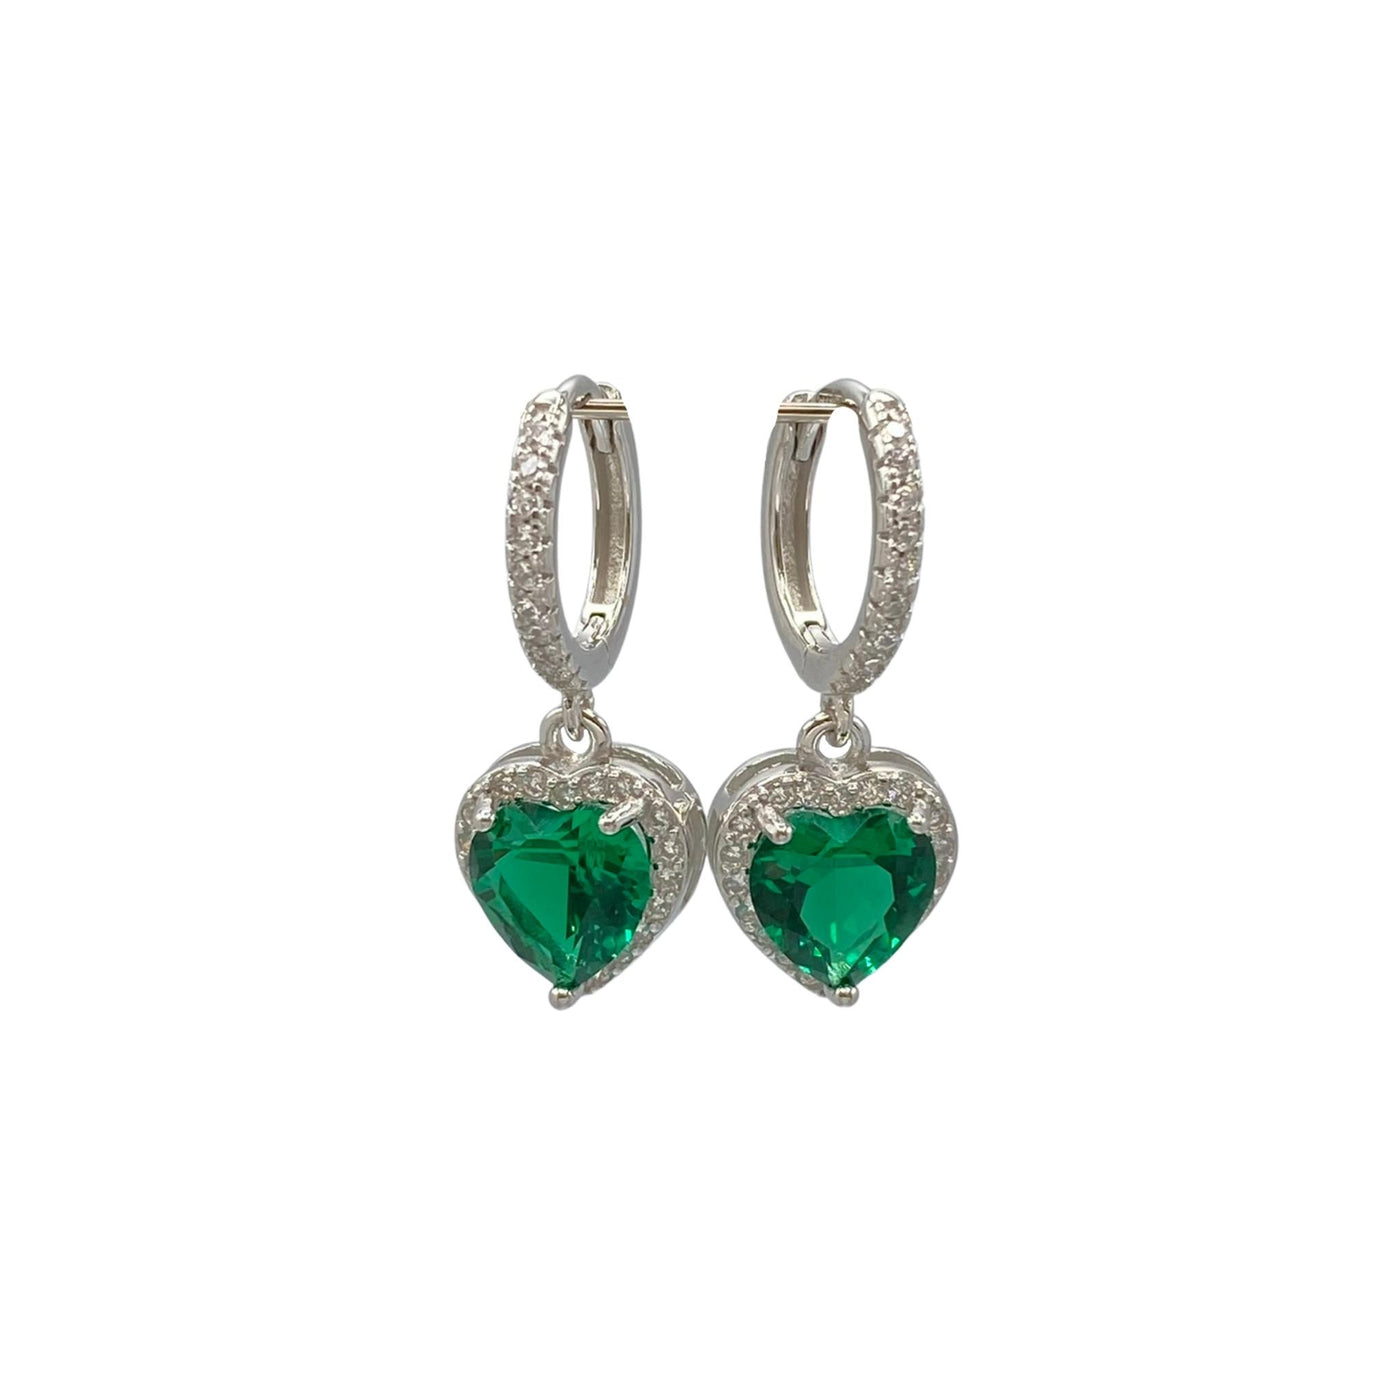 Silver hoop earrings with heart